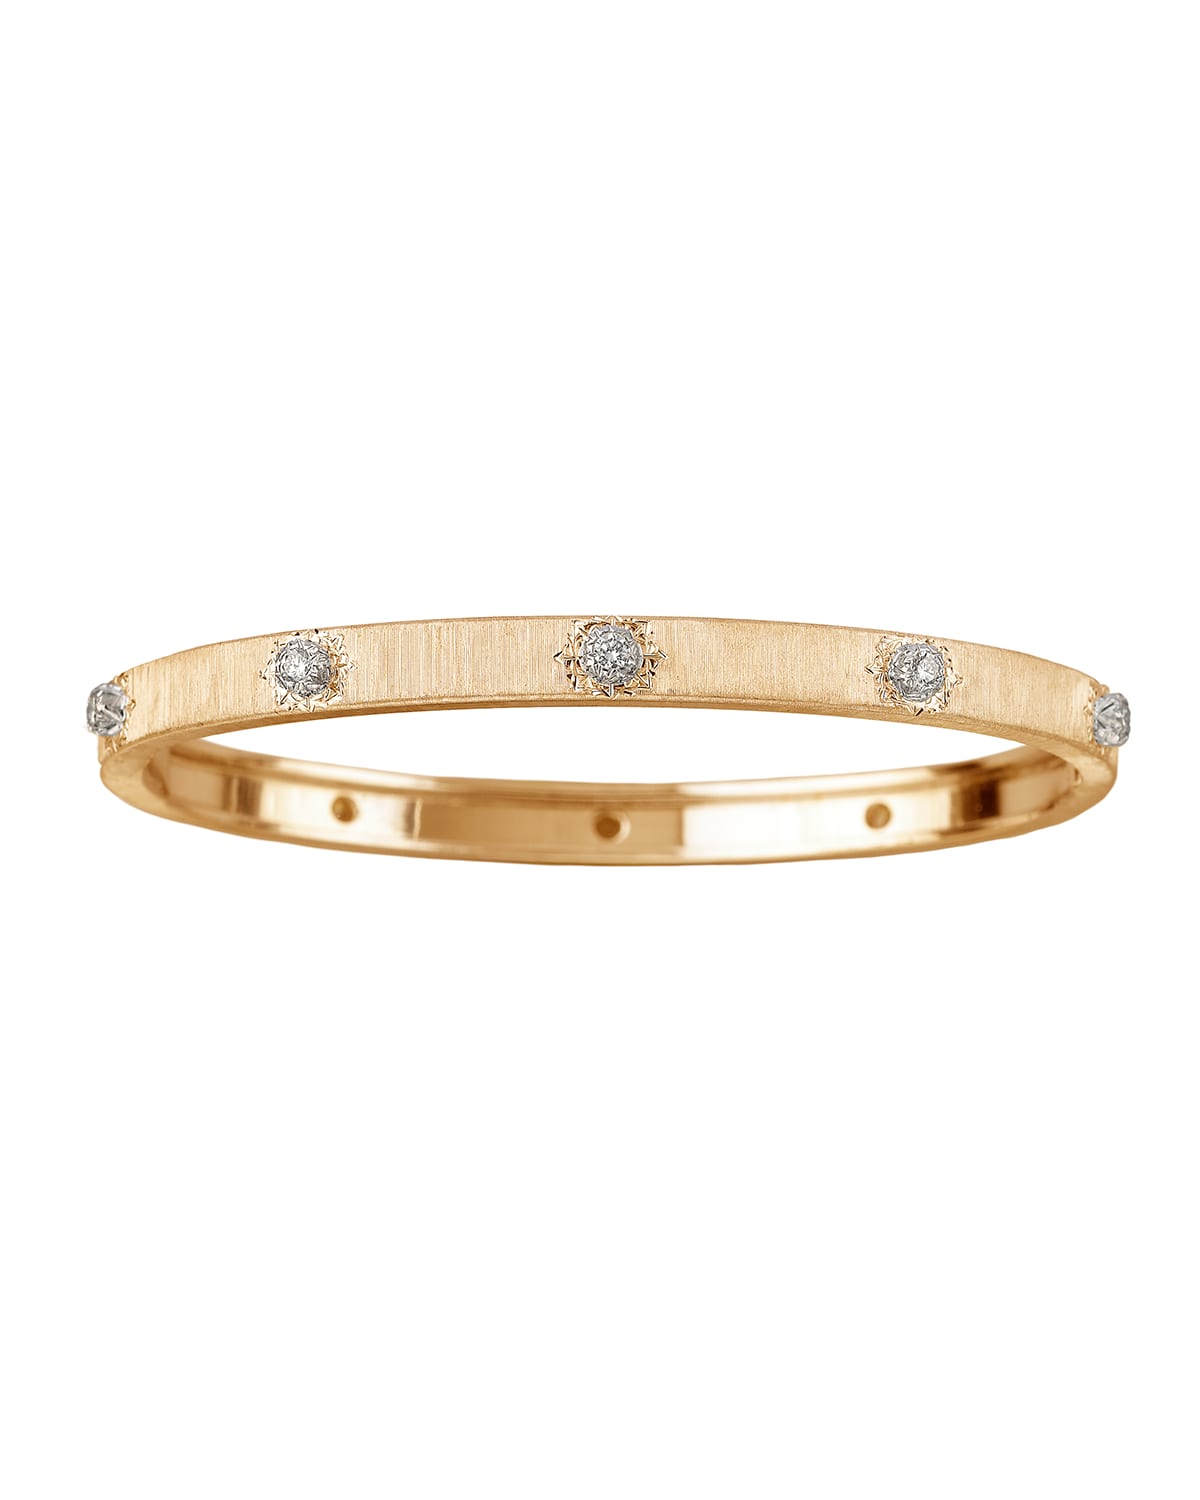 Macri 18K Gold Diamond Bangle Bracelet